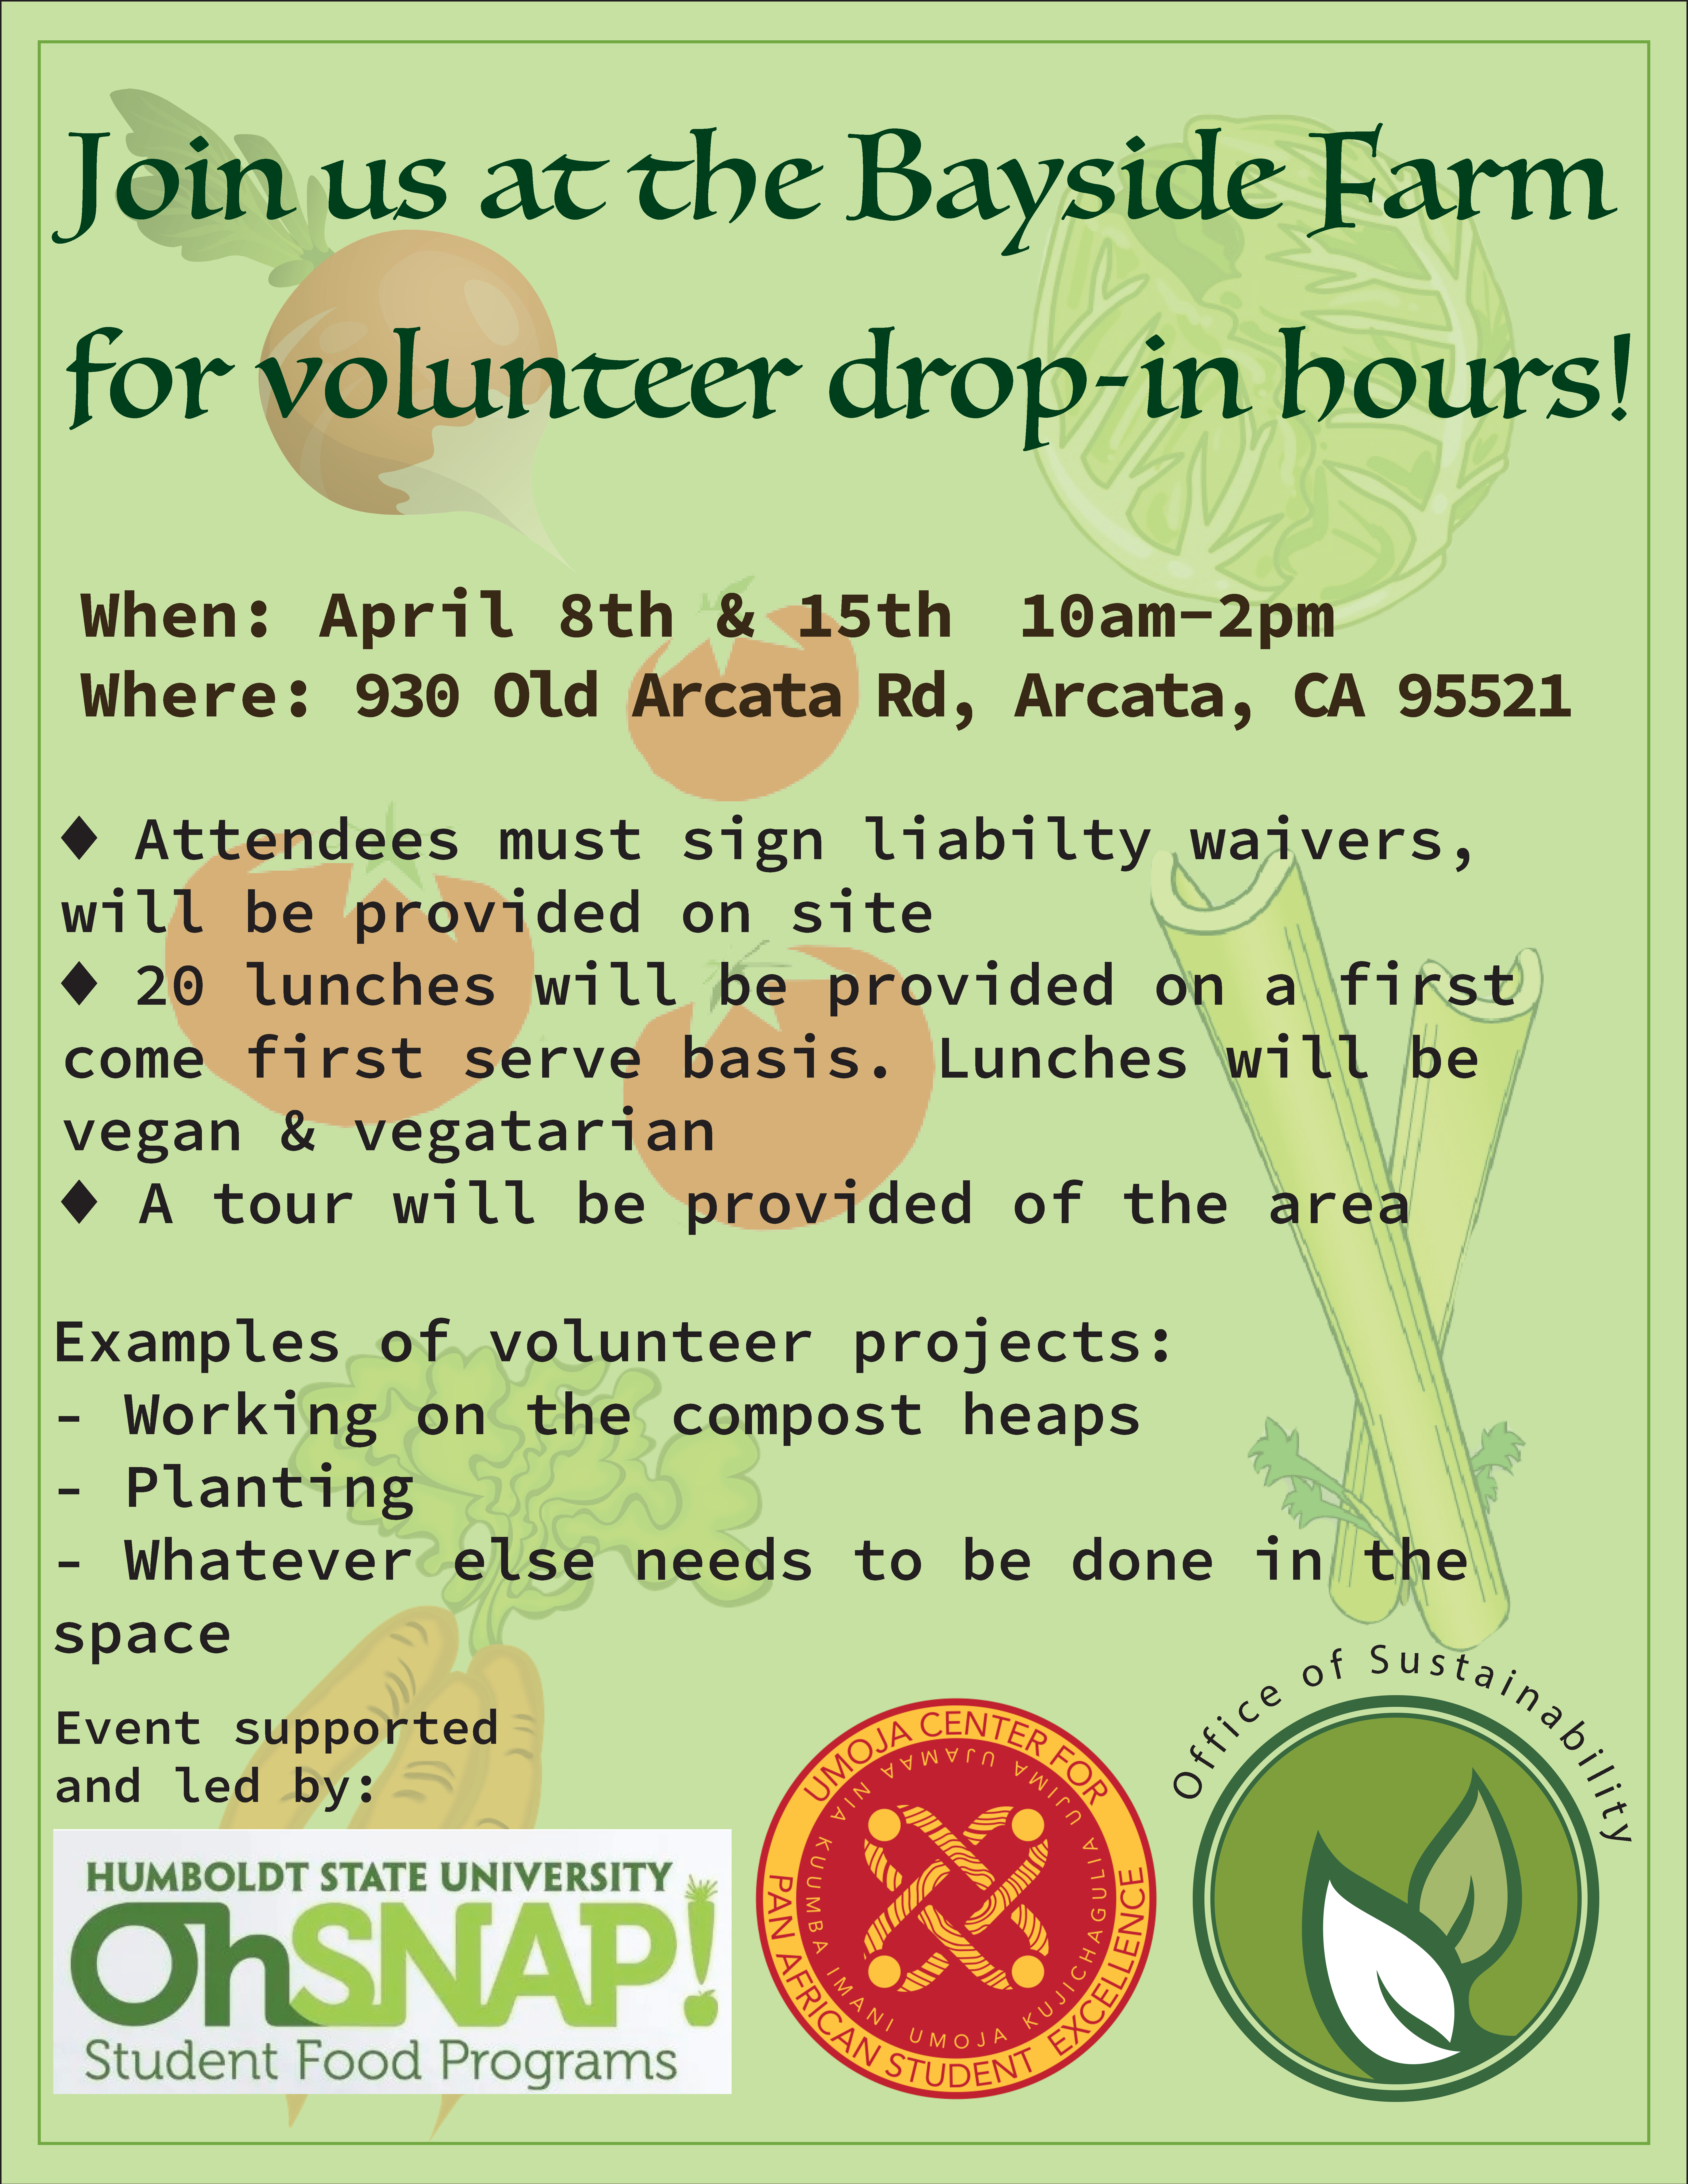 Bayside Farm Volunteer Day April 8th 10am- 2pm 930 Old Arcata Road